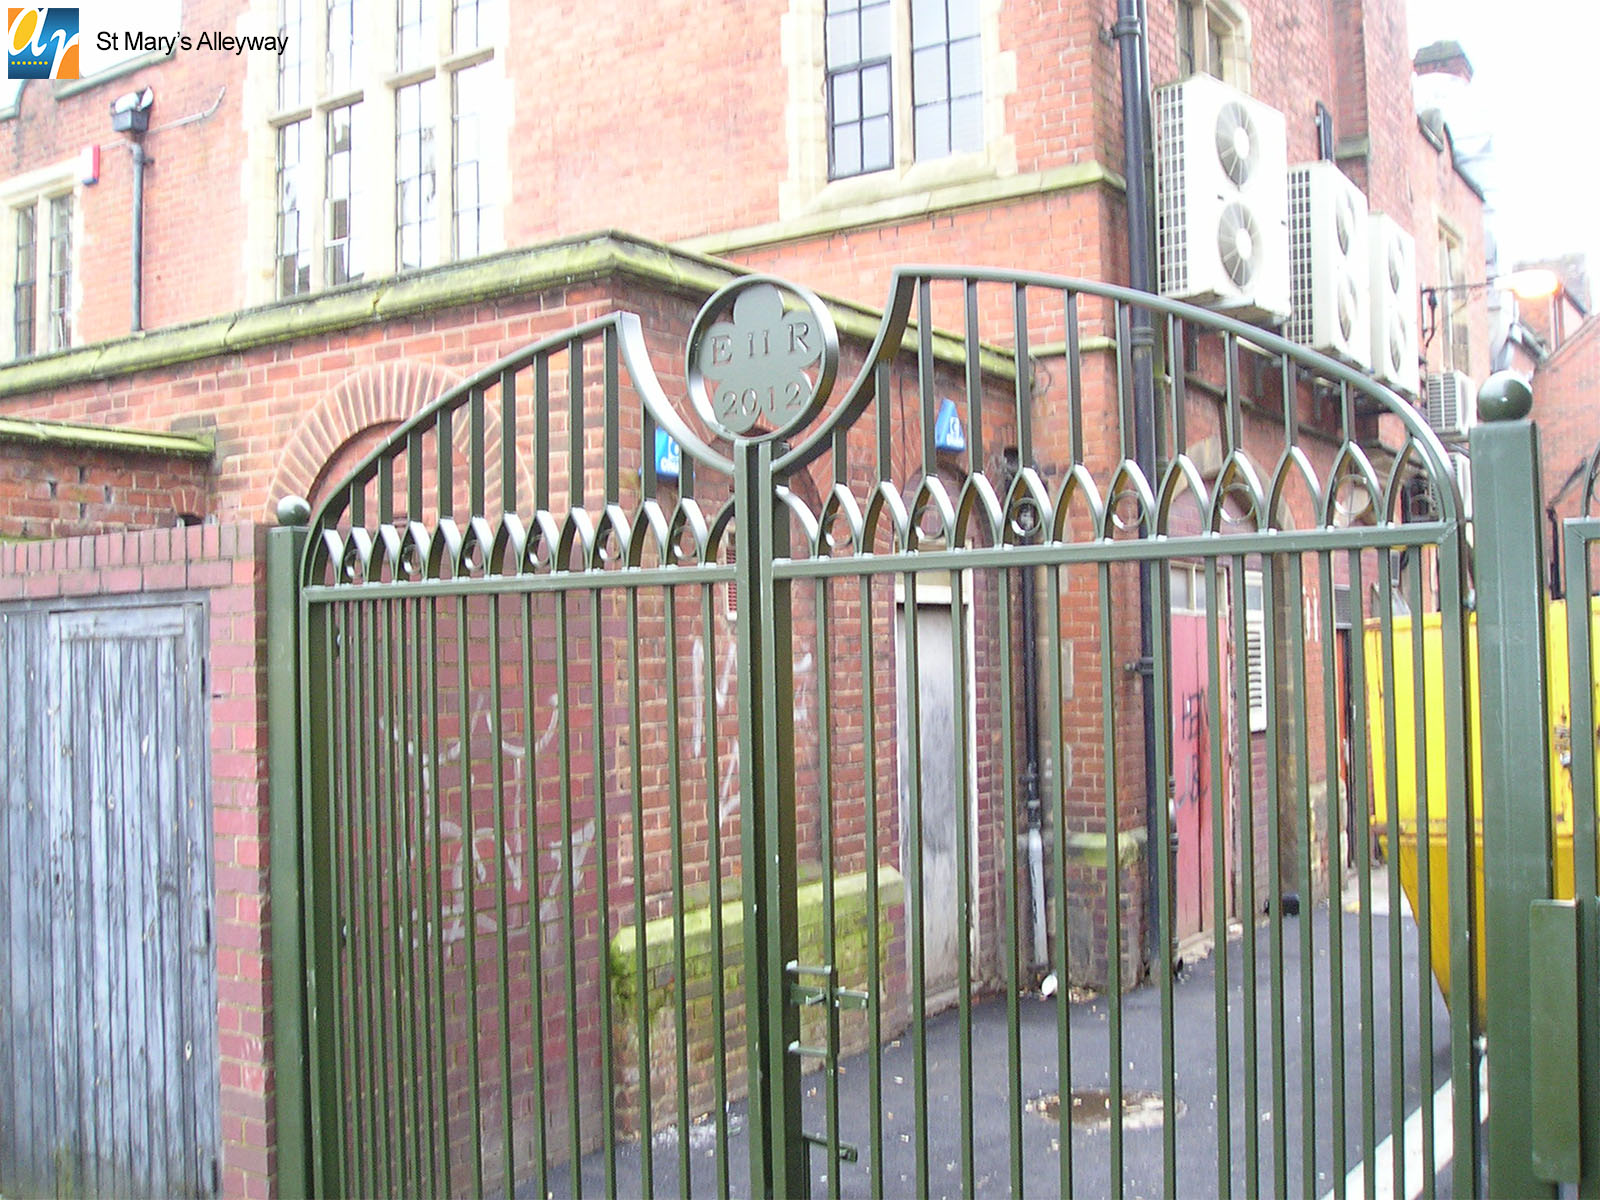 St. Mary's Alleyway metal gate